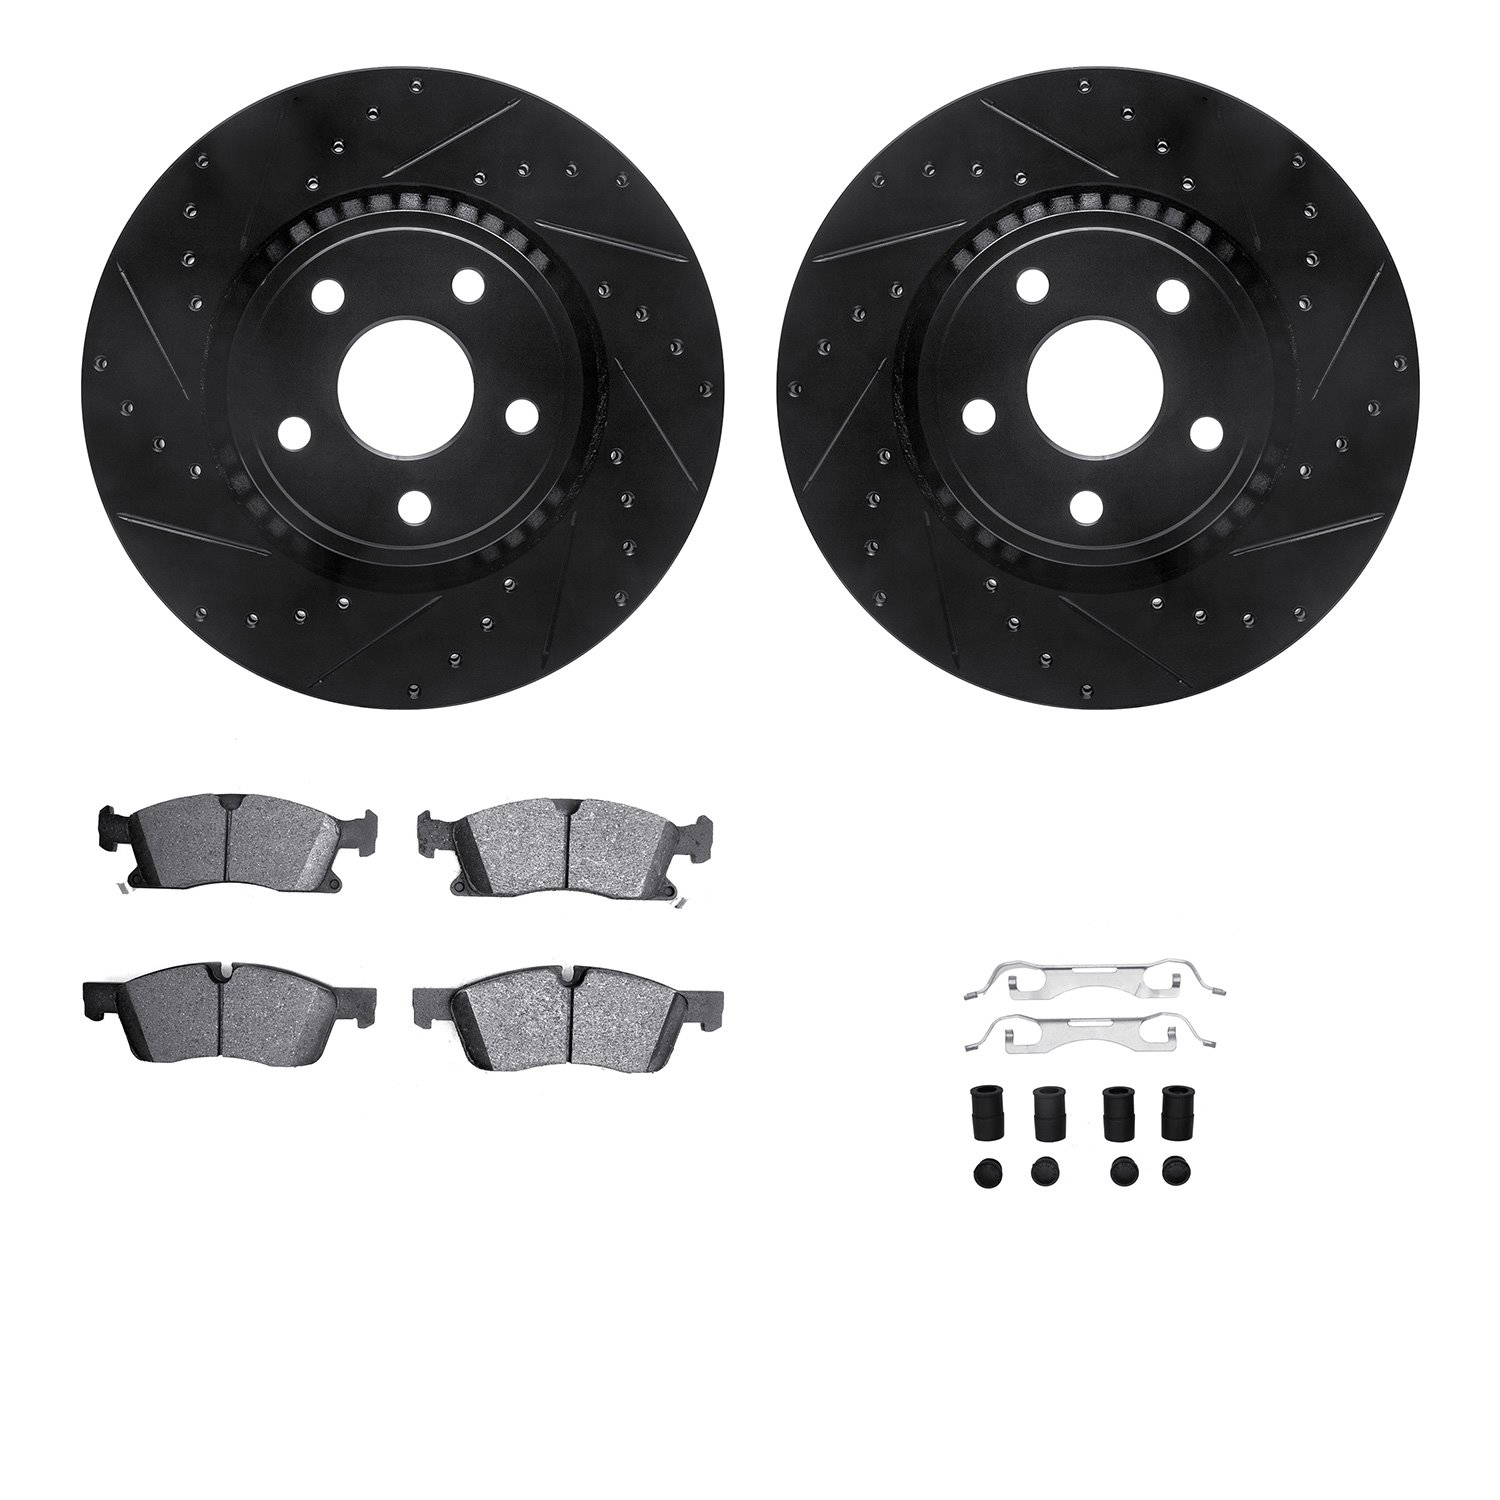 8412-42009 Drilled/Slotted Brake Rotors with Ultimate-Duty Brake Pads Kit & Hardware [Black], Fits Select Mopar, Position: Front